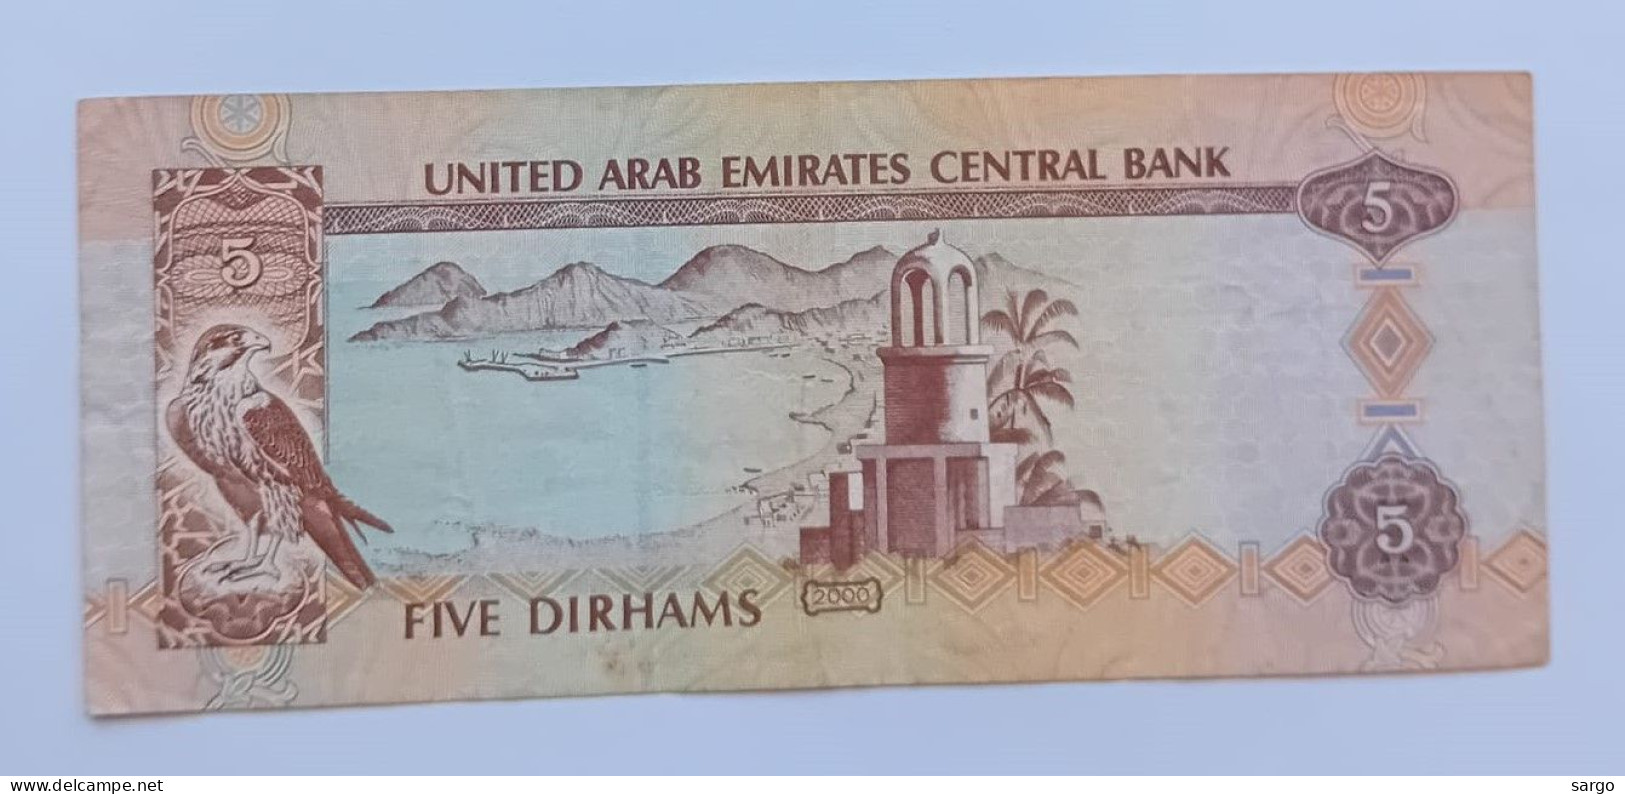 UNITED ARAB EMIRATES - 5 DIRHAMS - 1993-1995 - CIRC P 12 - BANKNOTES - PAPER MONEY - CARTAMONETA - - Emirats Arabes Unis